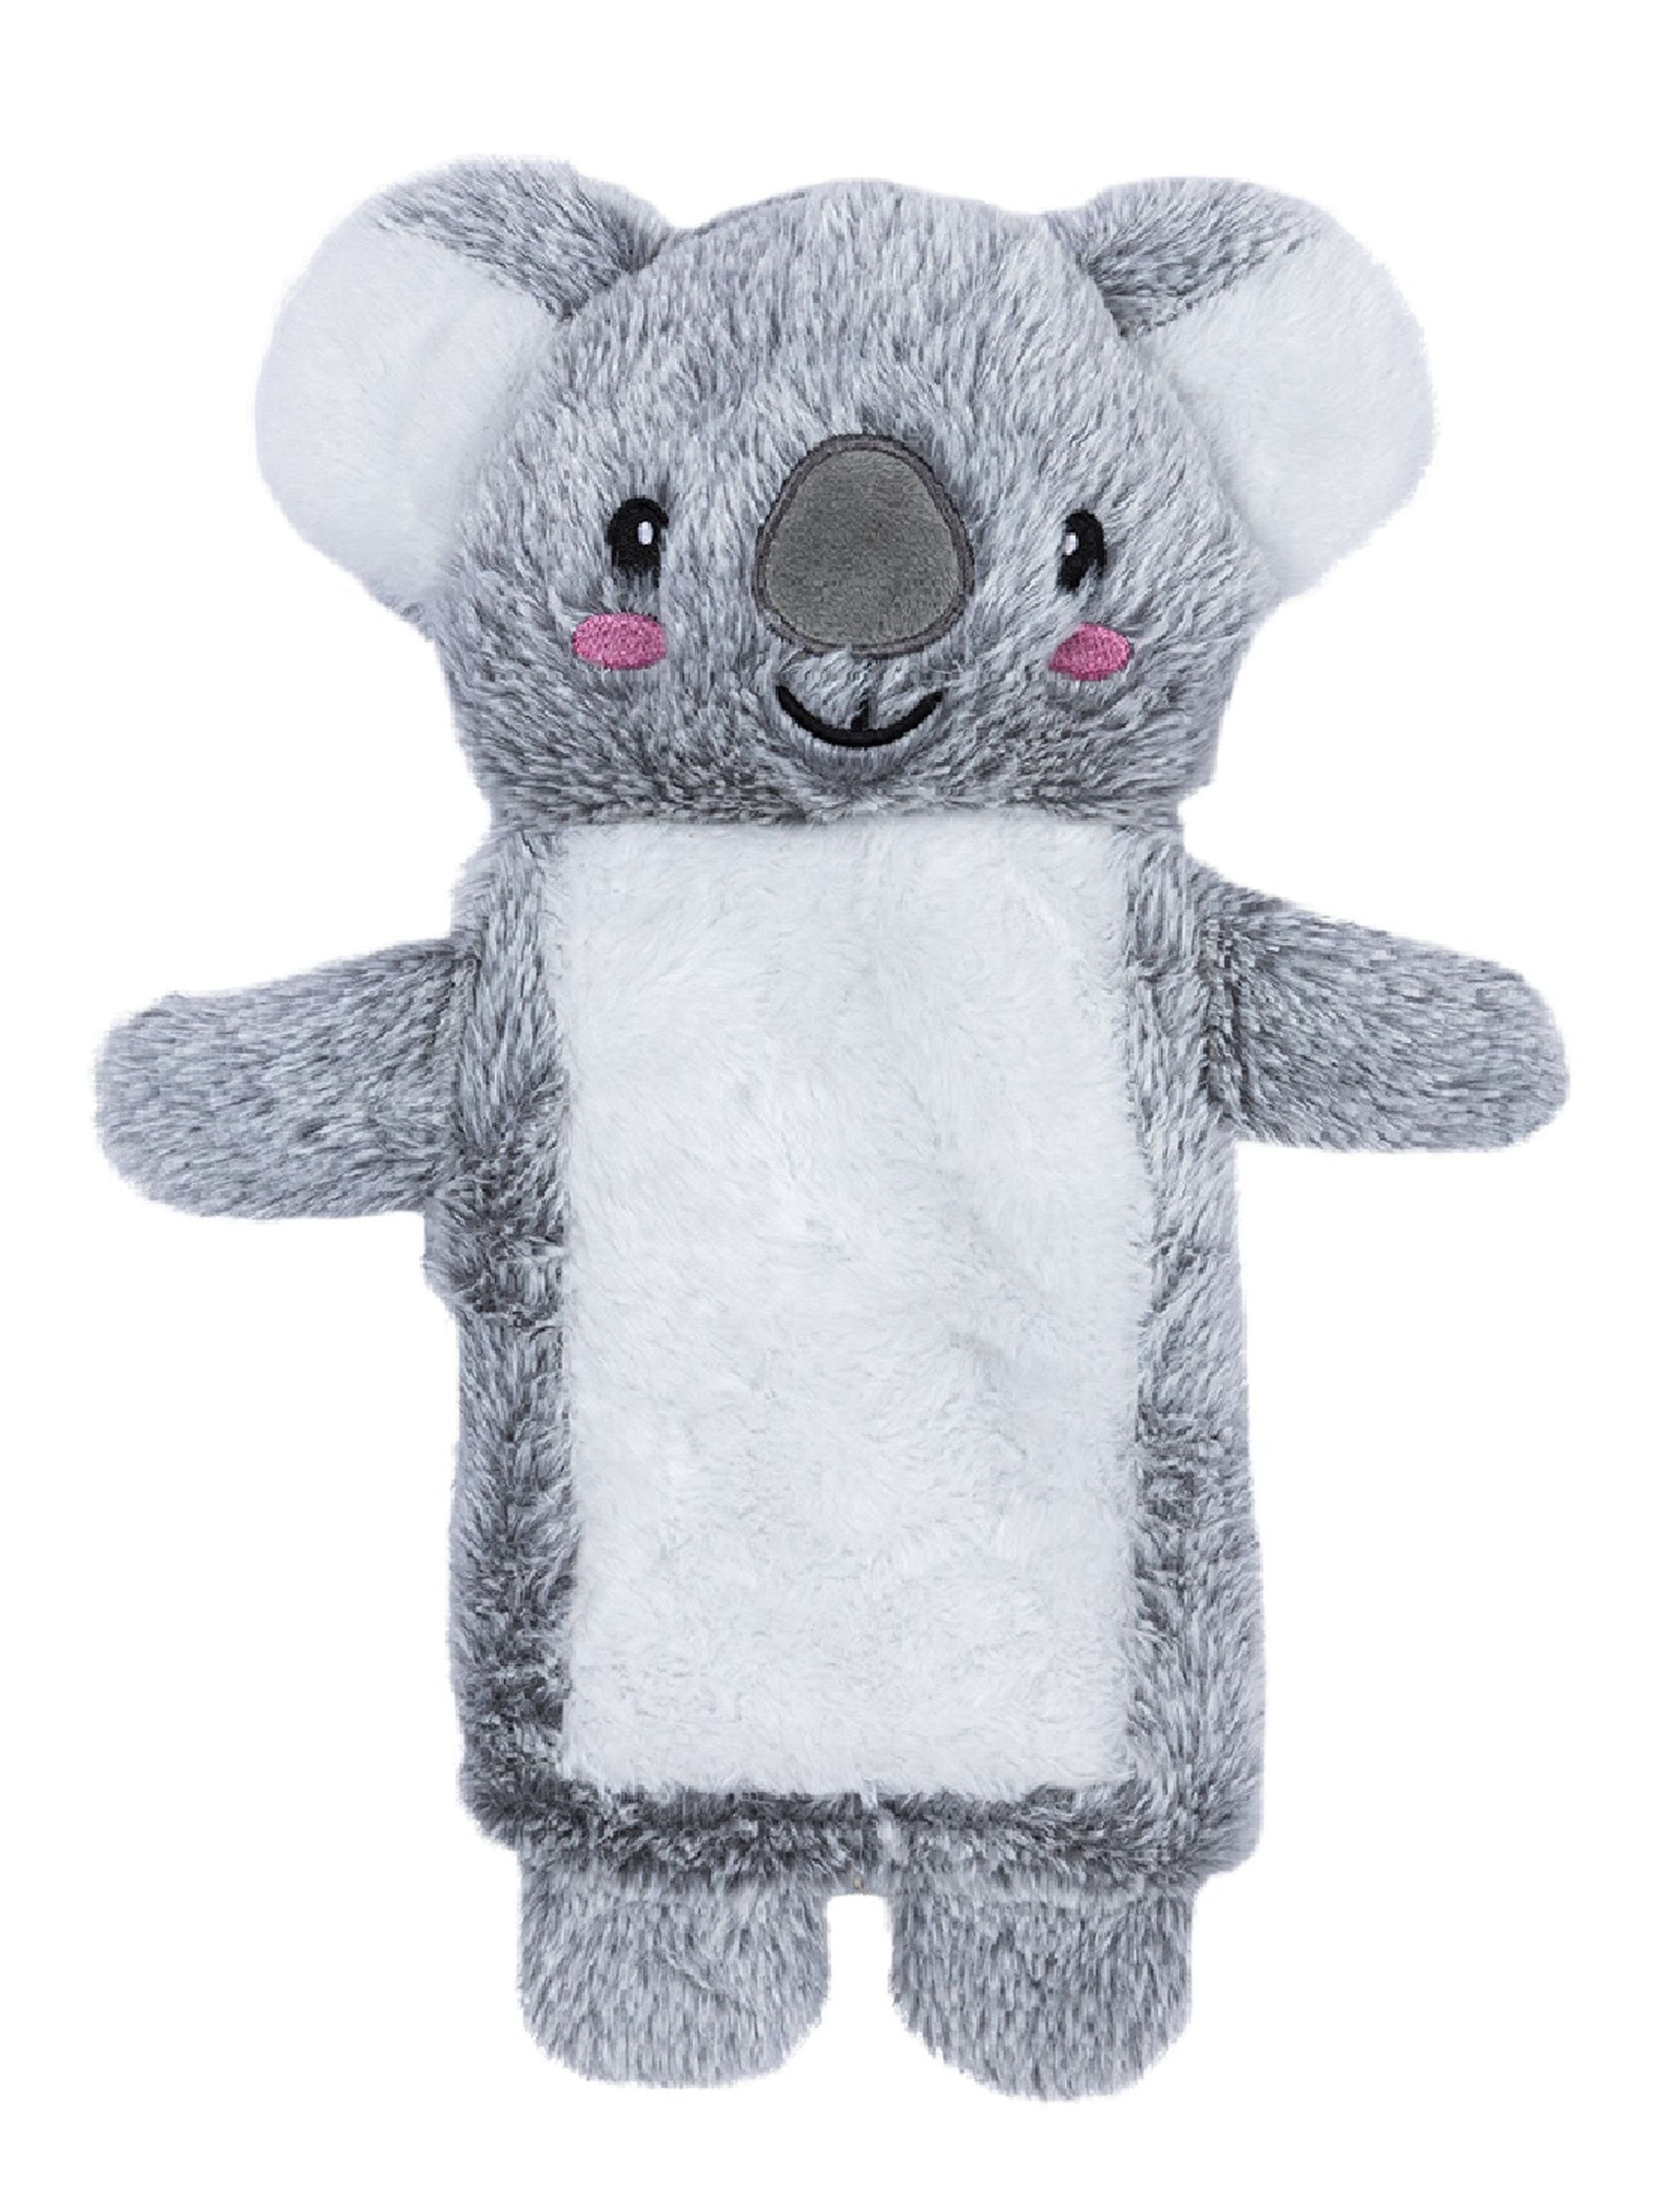 Rungassi Wärmflasche Kinder Wärmflasche Kinderwärmflasche 0,75L mit Bezug Koalabär Bär